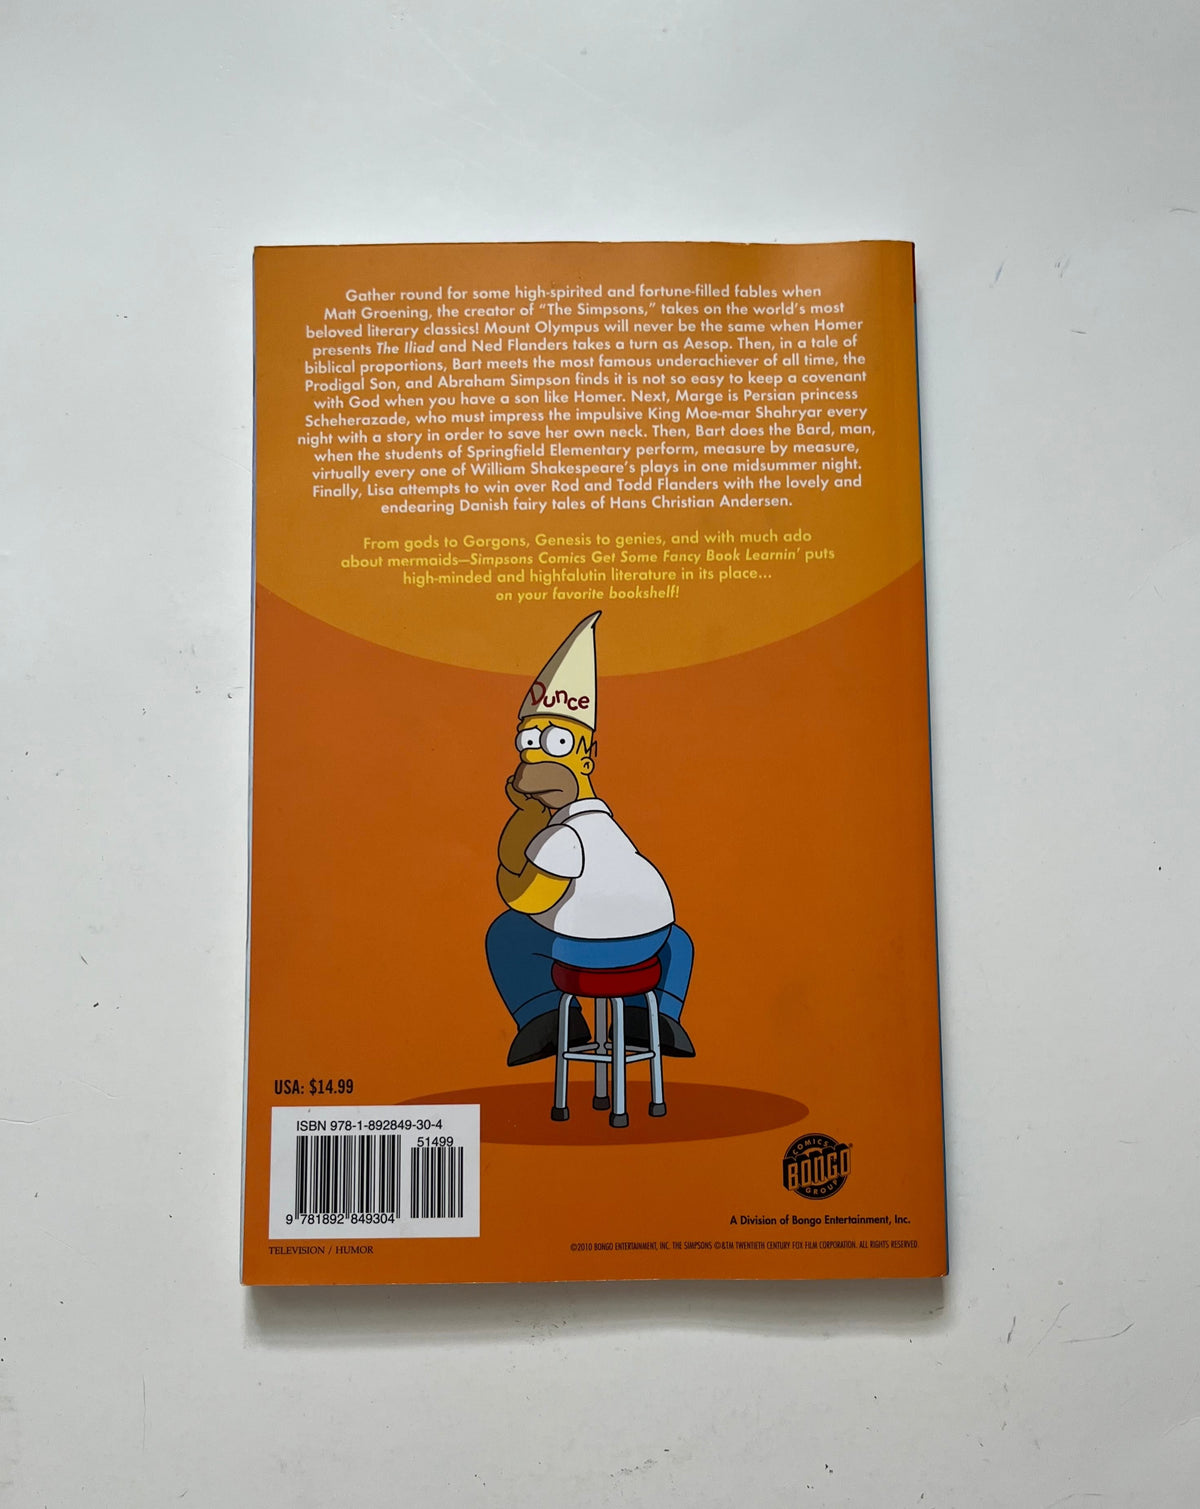 DONATE: Simpsons Comics: Get Some Fancy Book Learnin&#39; by Matt Groening